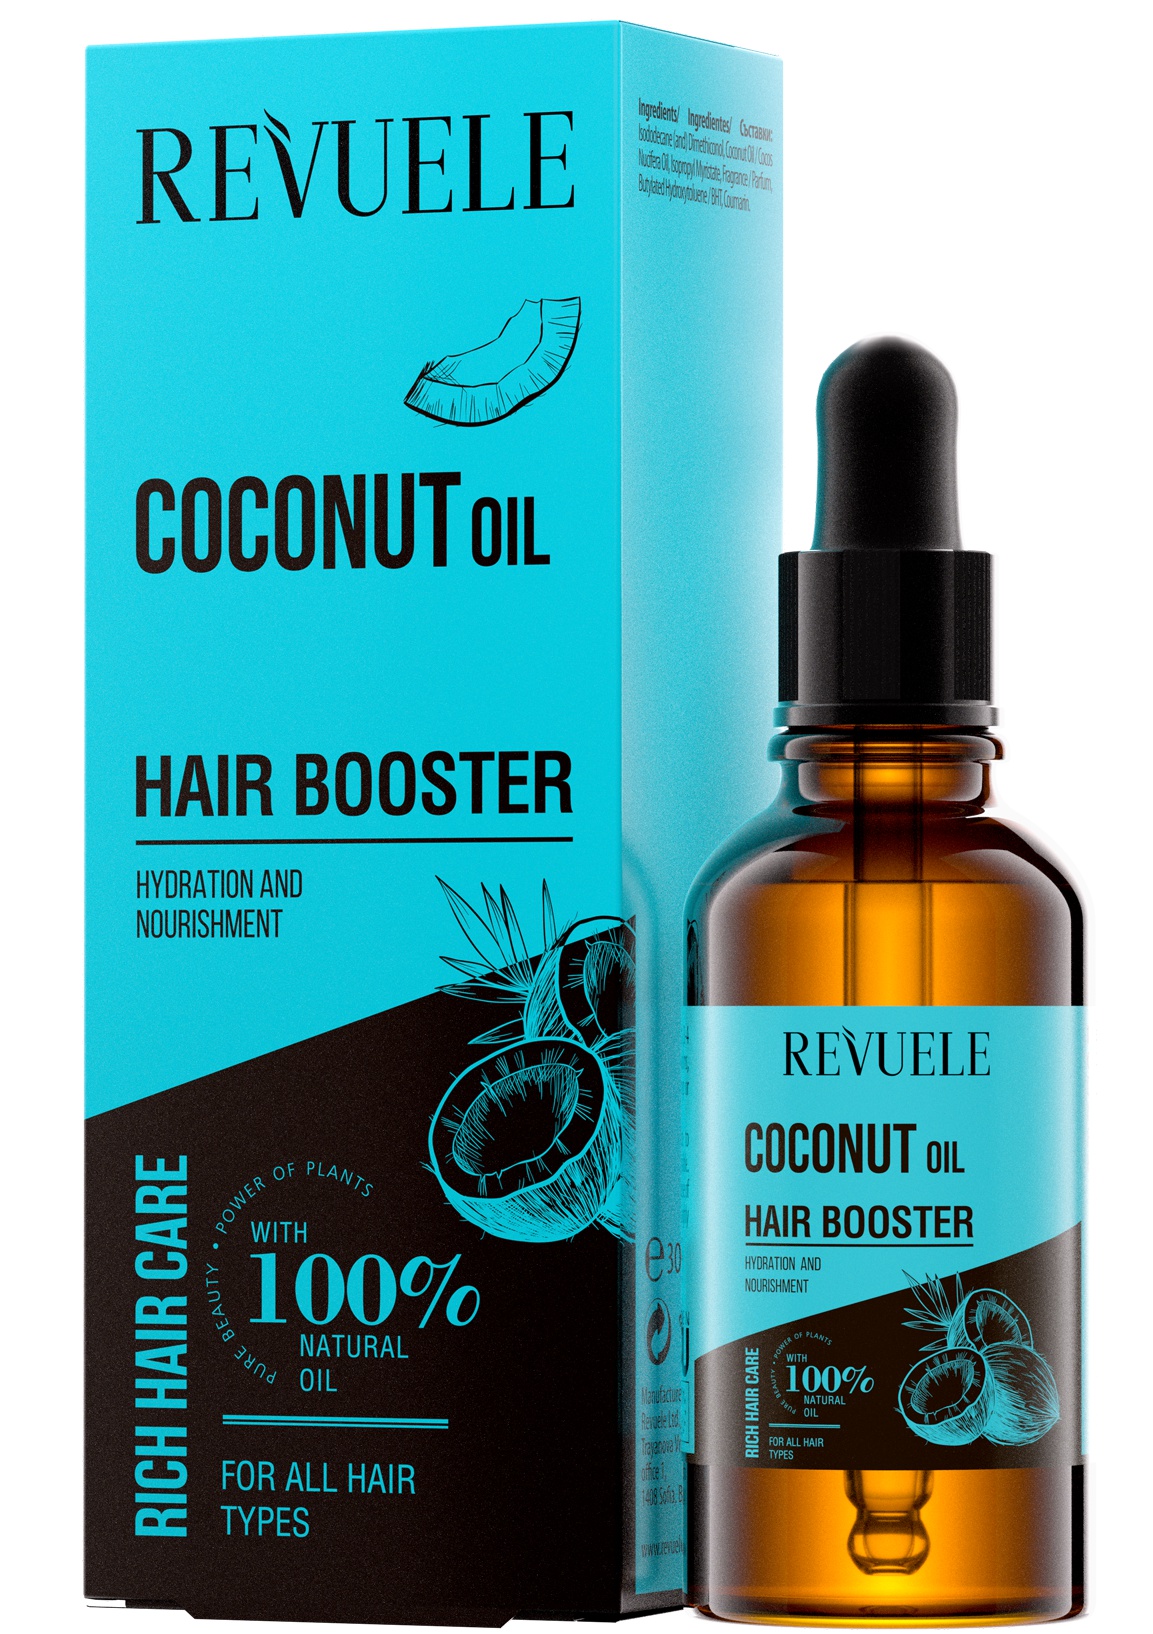 Revuele Coconut Oil Hair Booster